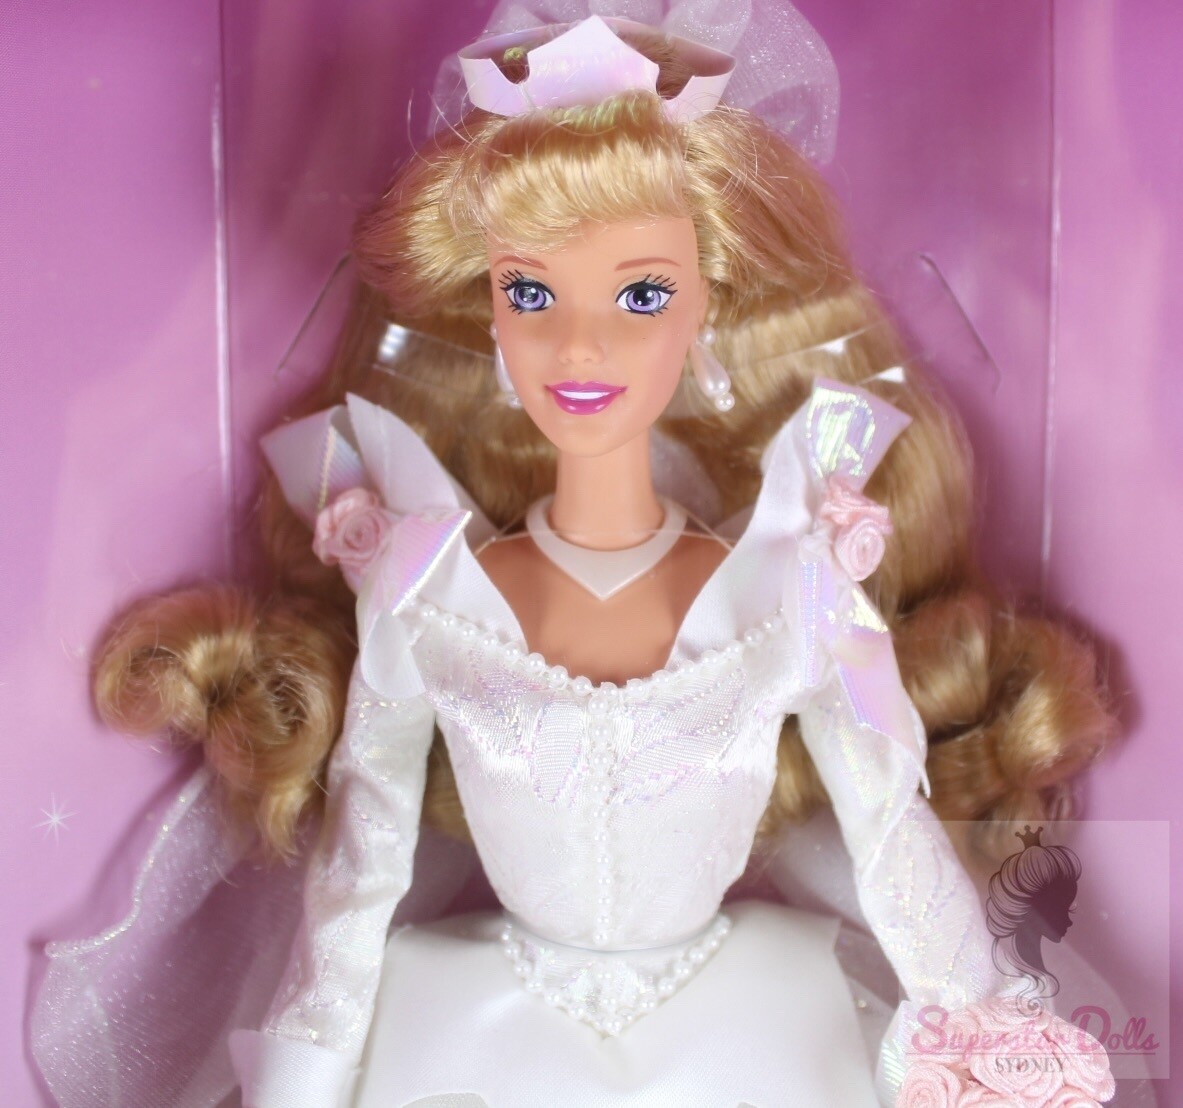 1997 Disney: Wedding Sleeping Beauty Doll by Mattel